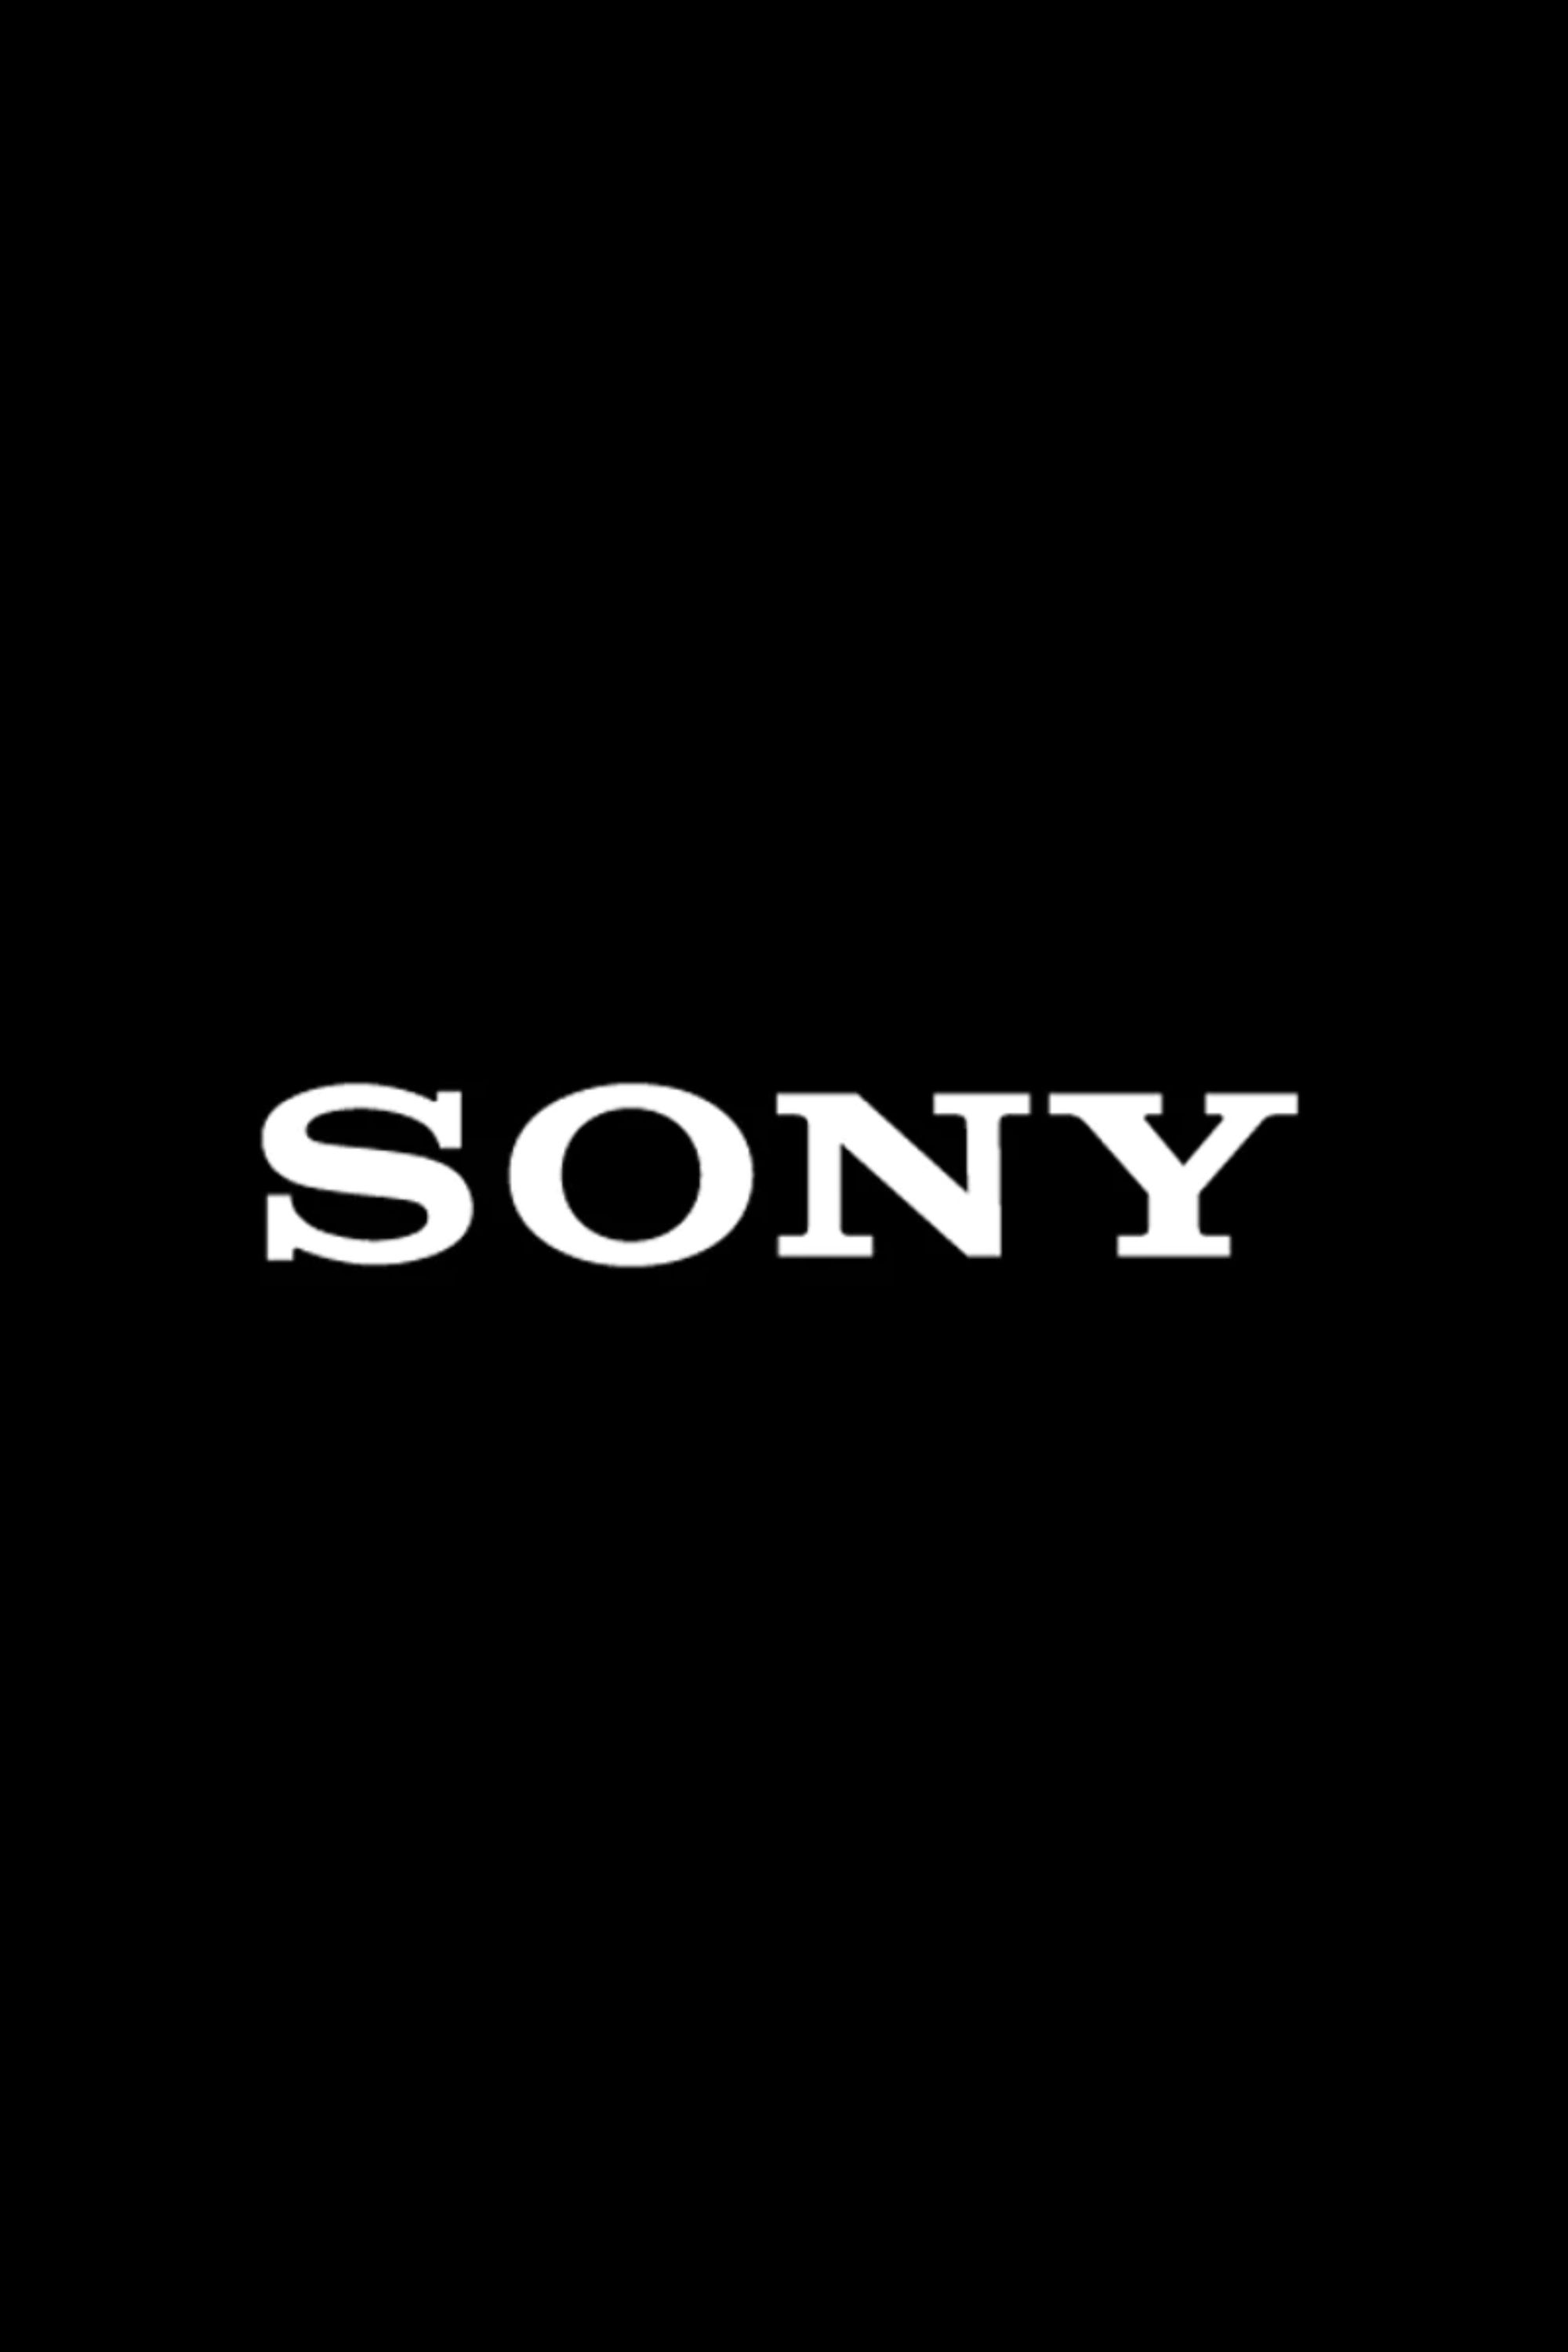 Sony logo over black